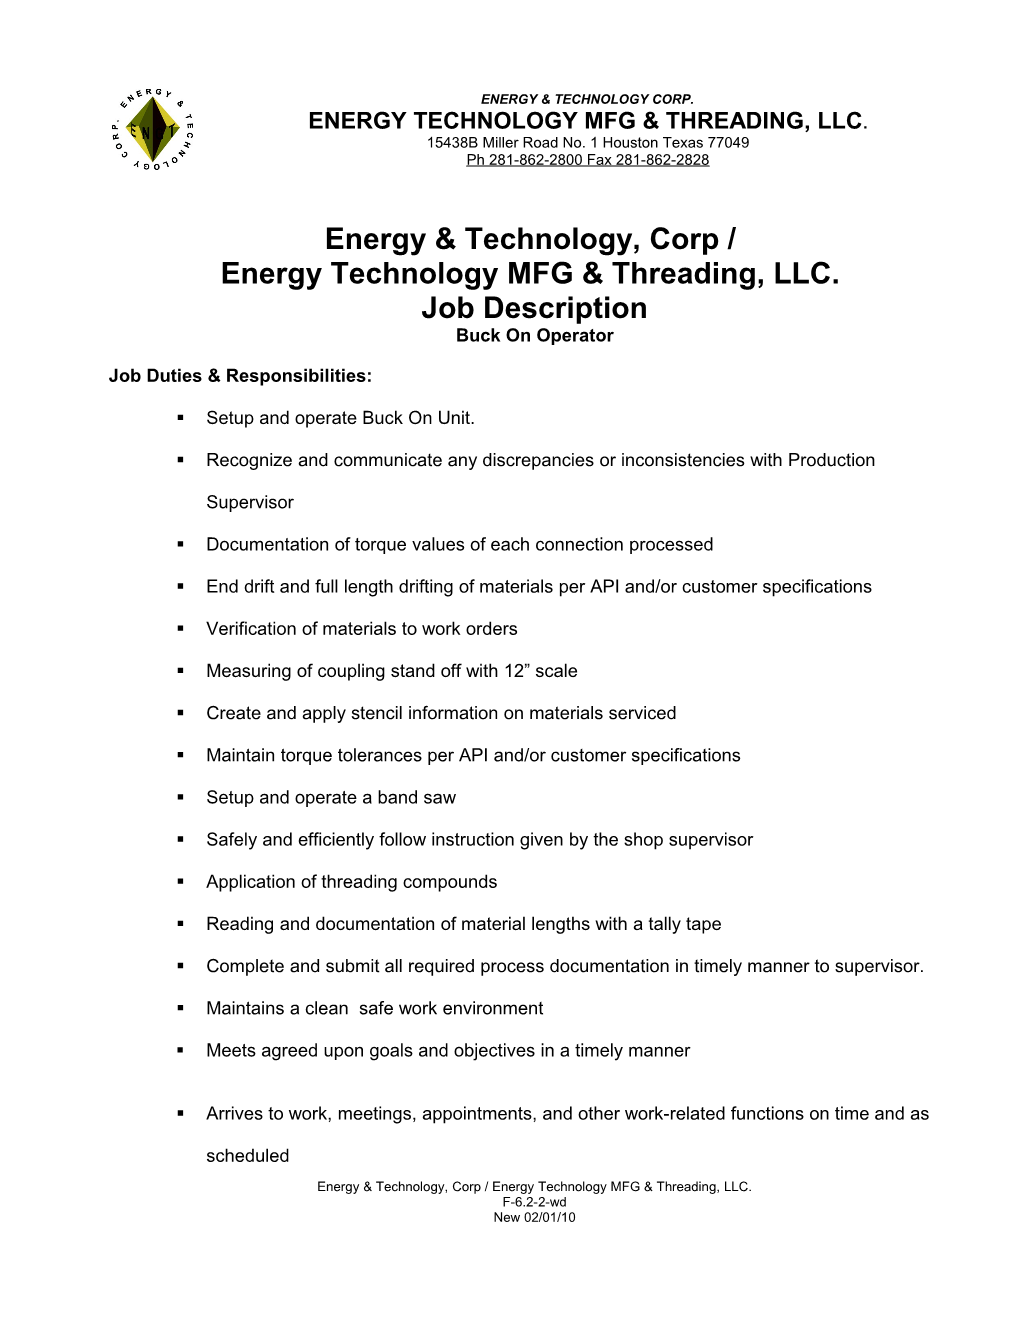 Energy Technology MFG & Threading, LLC